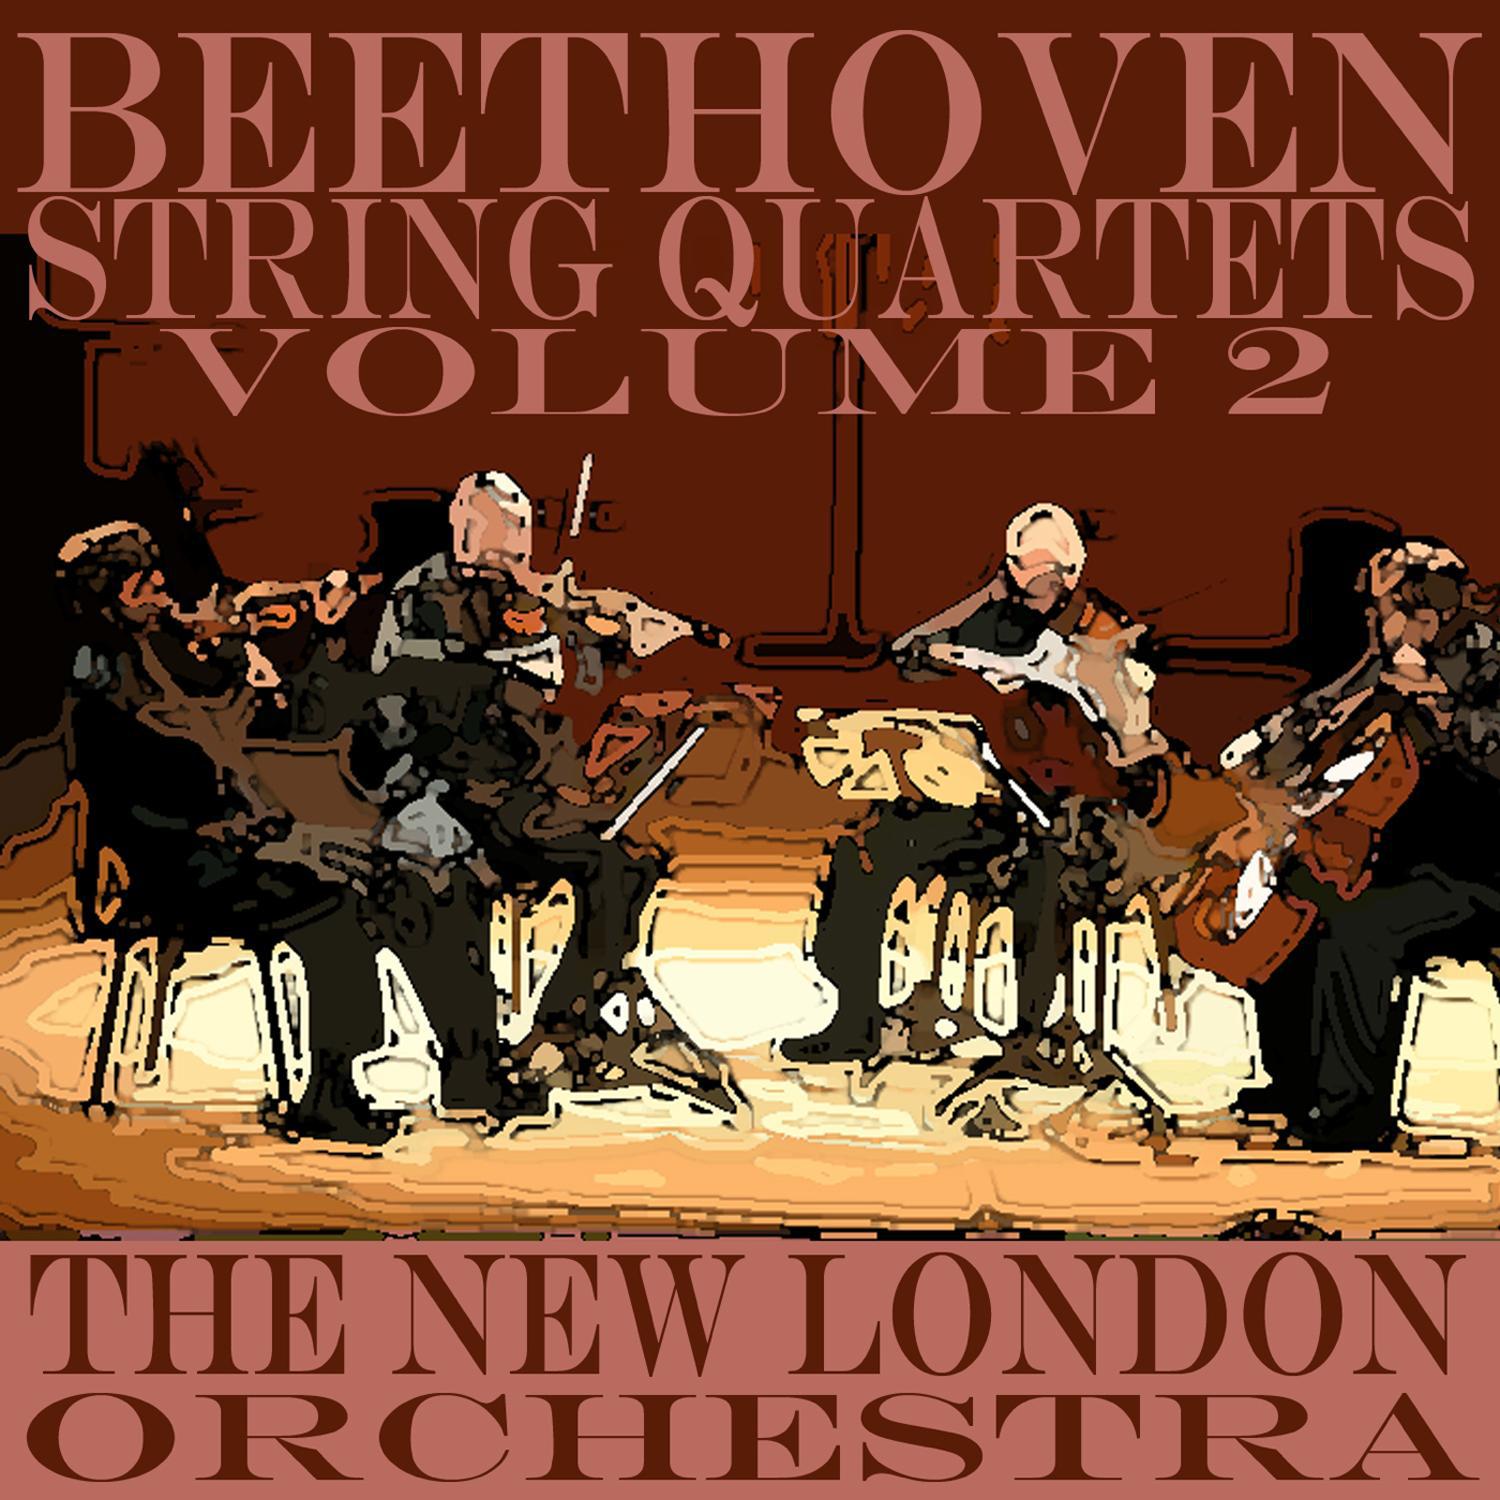 Beethoven String Quartets Volume Two